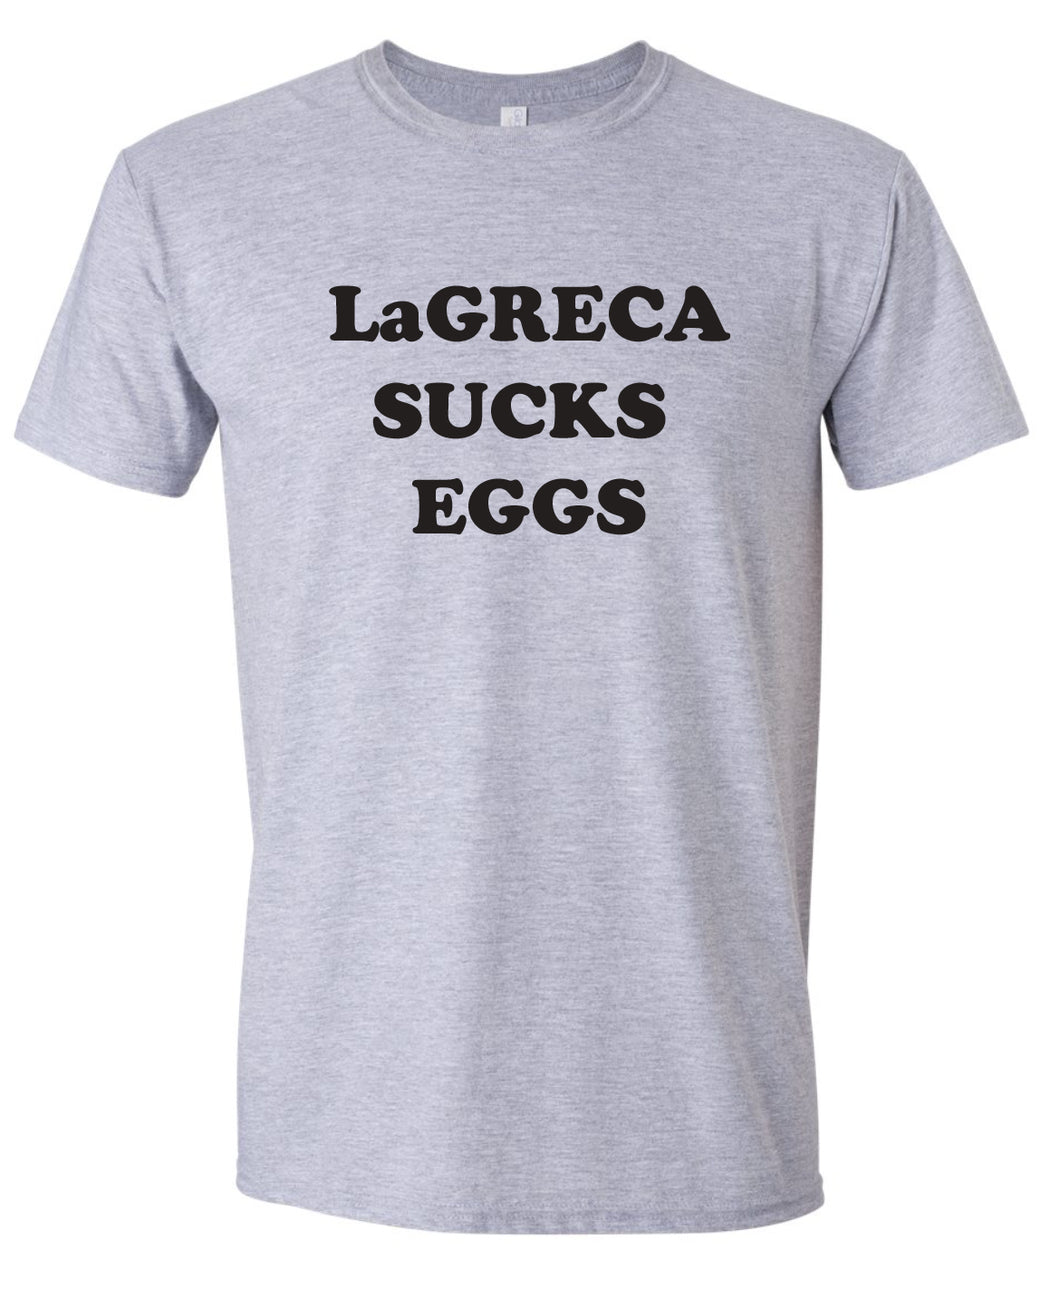 LaGreca Sucks Eggs Men's Tee 64000